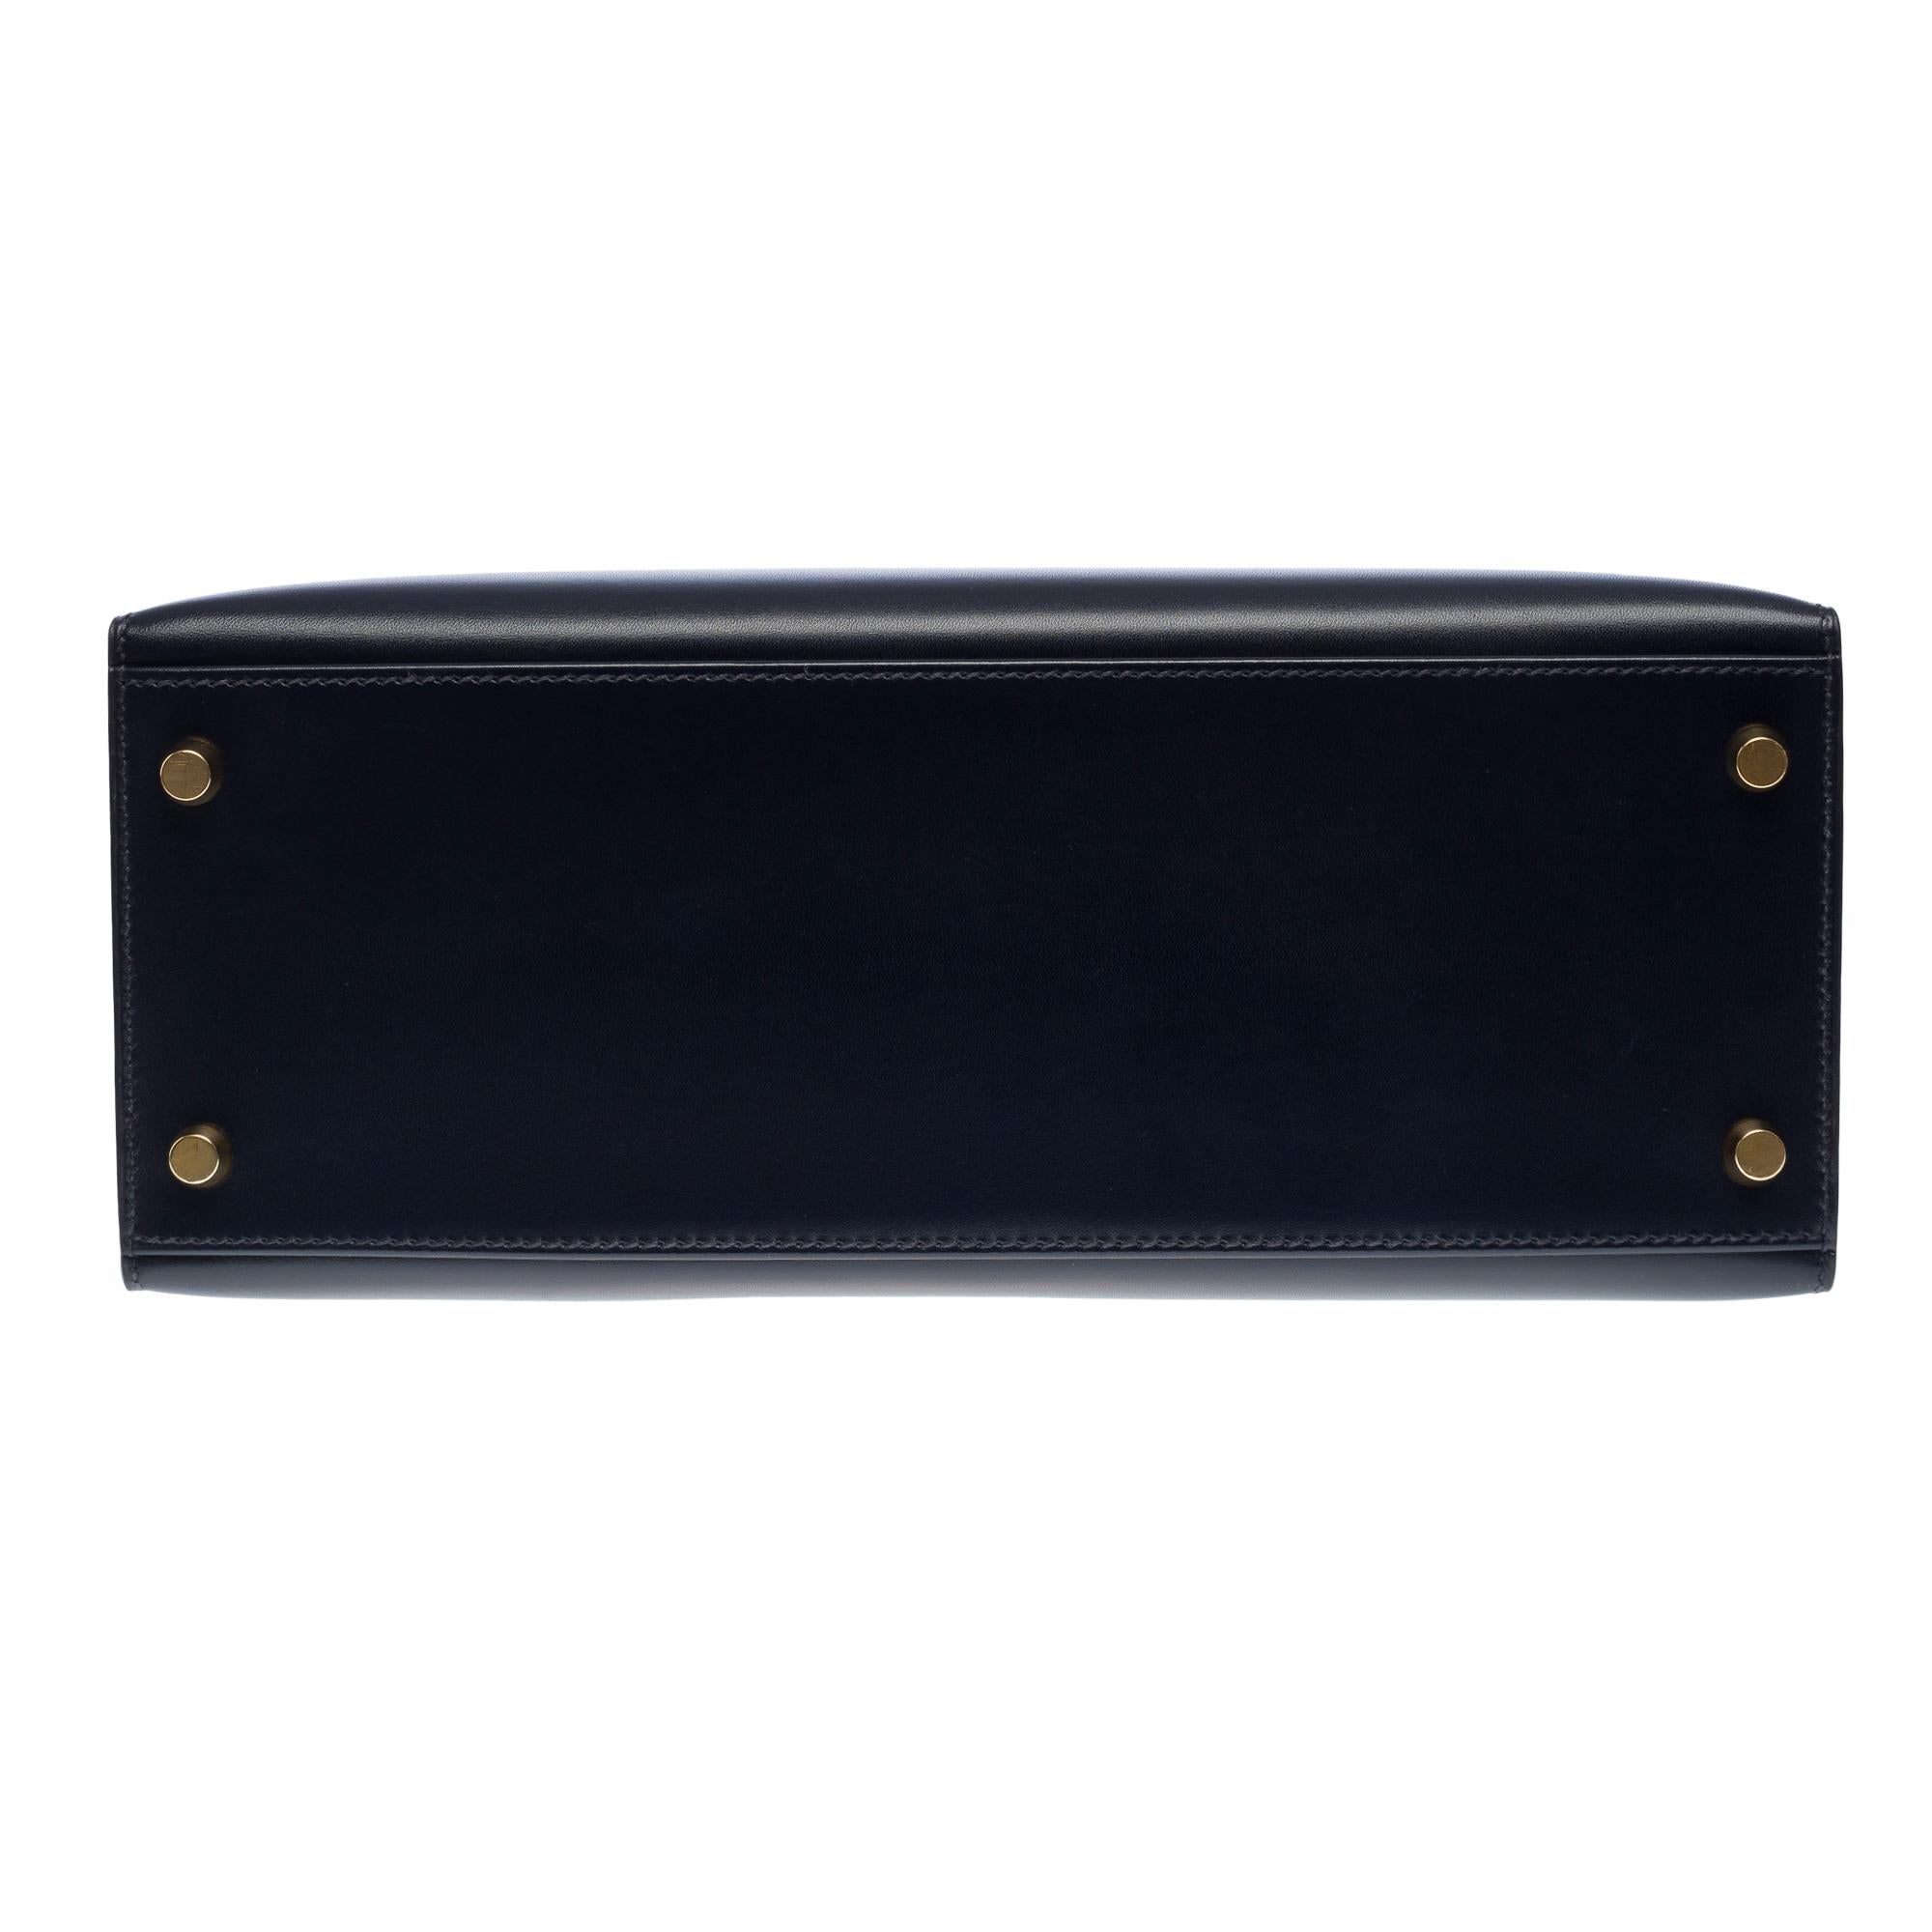 Hermes Kelly 28 sellier handbag strap in Navy Blue box calfskin leather, GHW For Sale 6